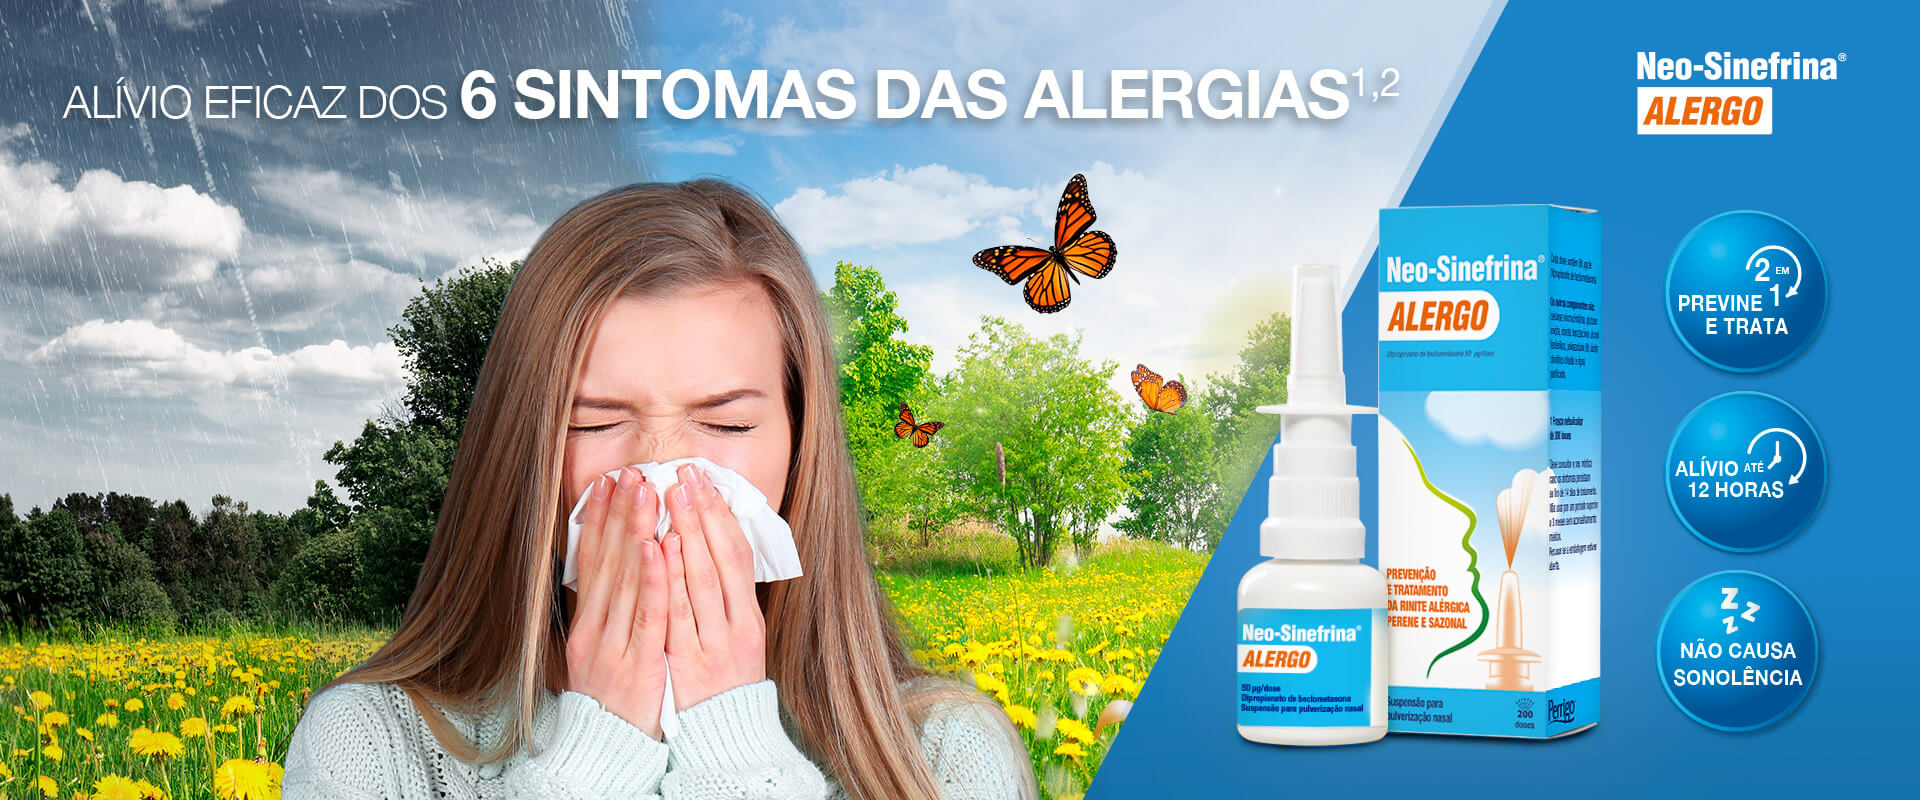 Neo-Sinefrina Alergo Sinusite Sintoma alergias